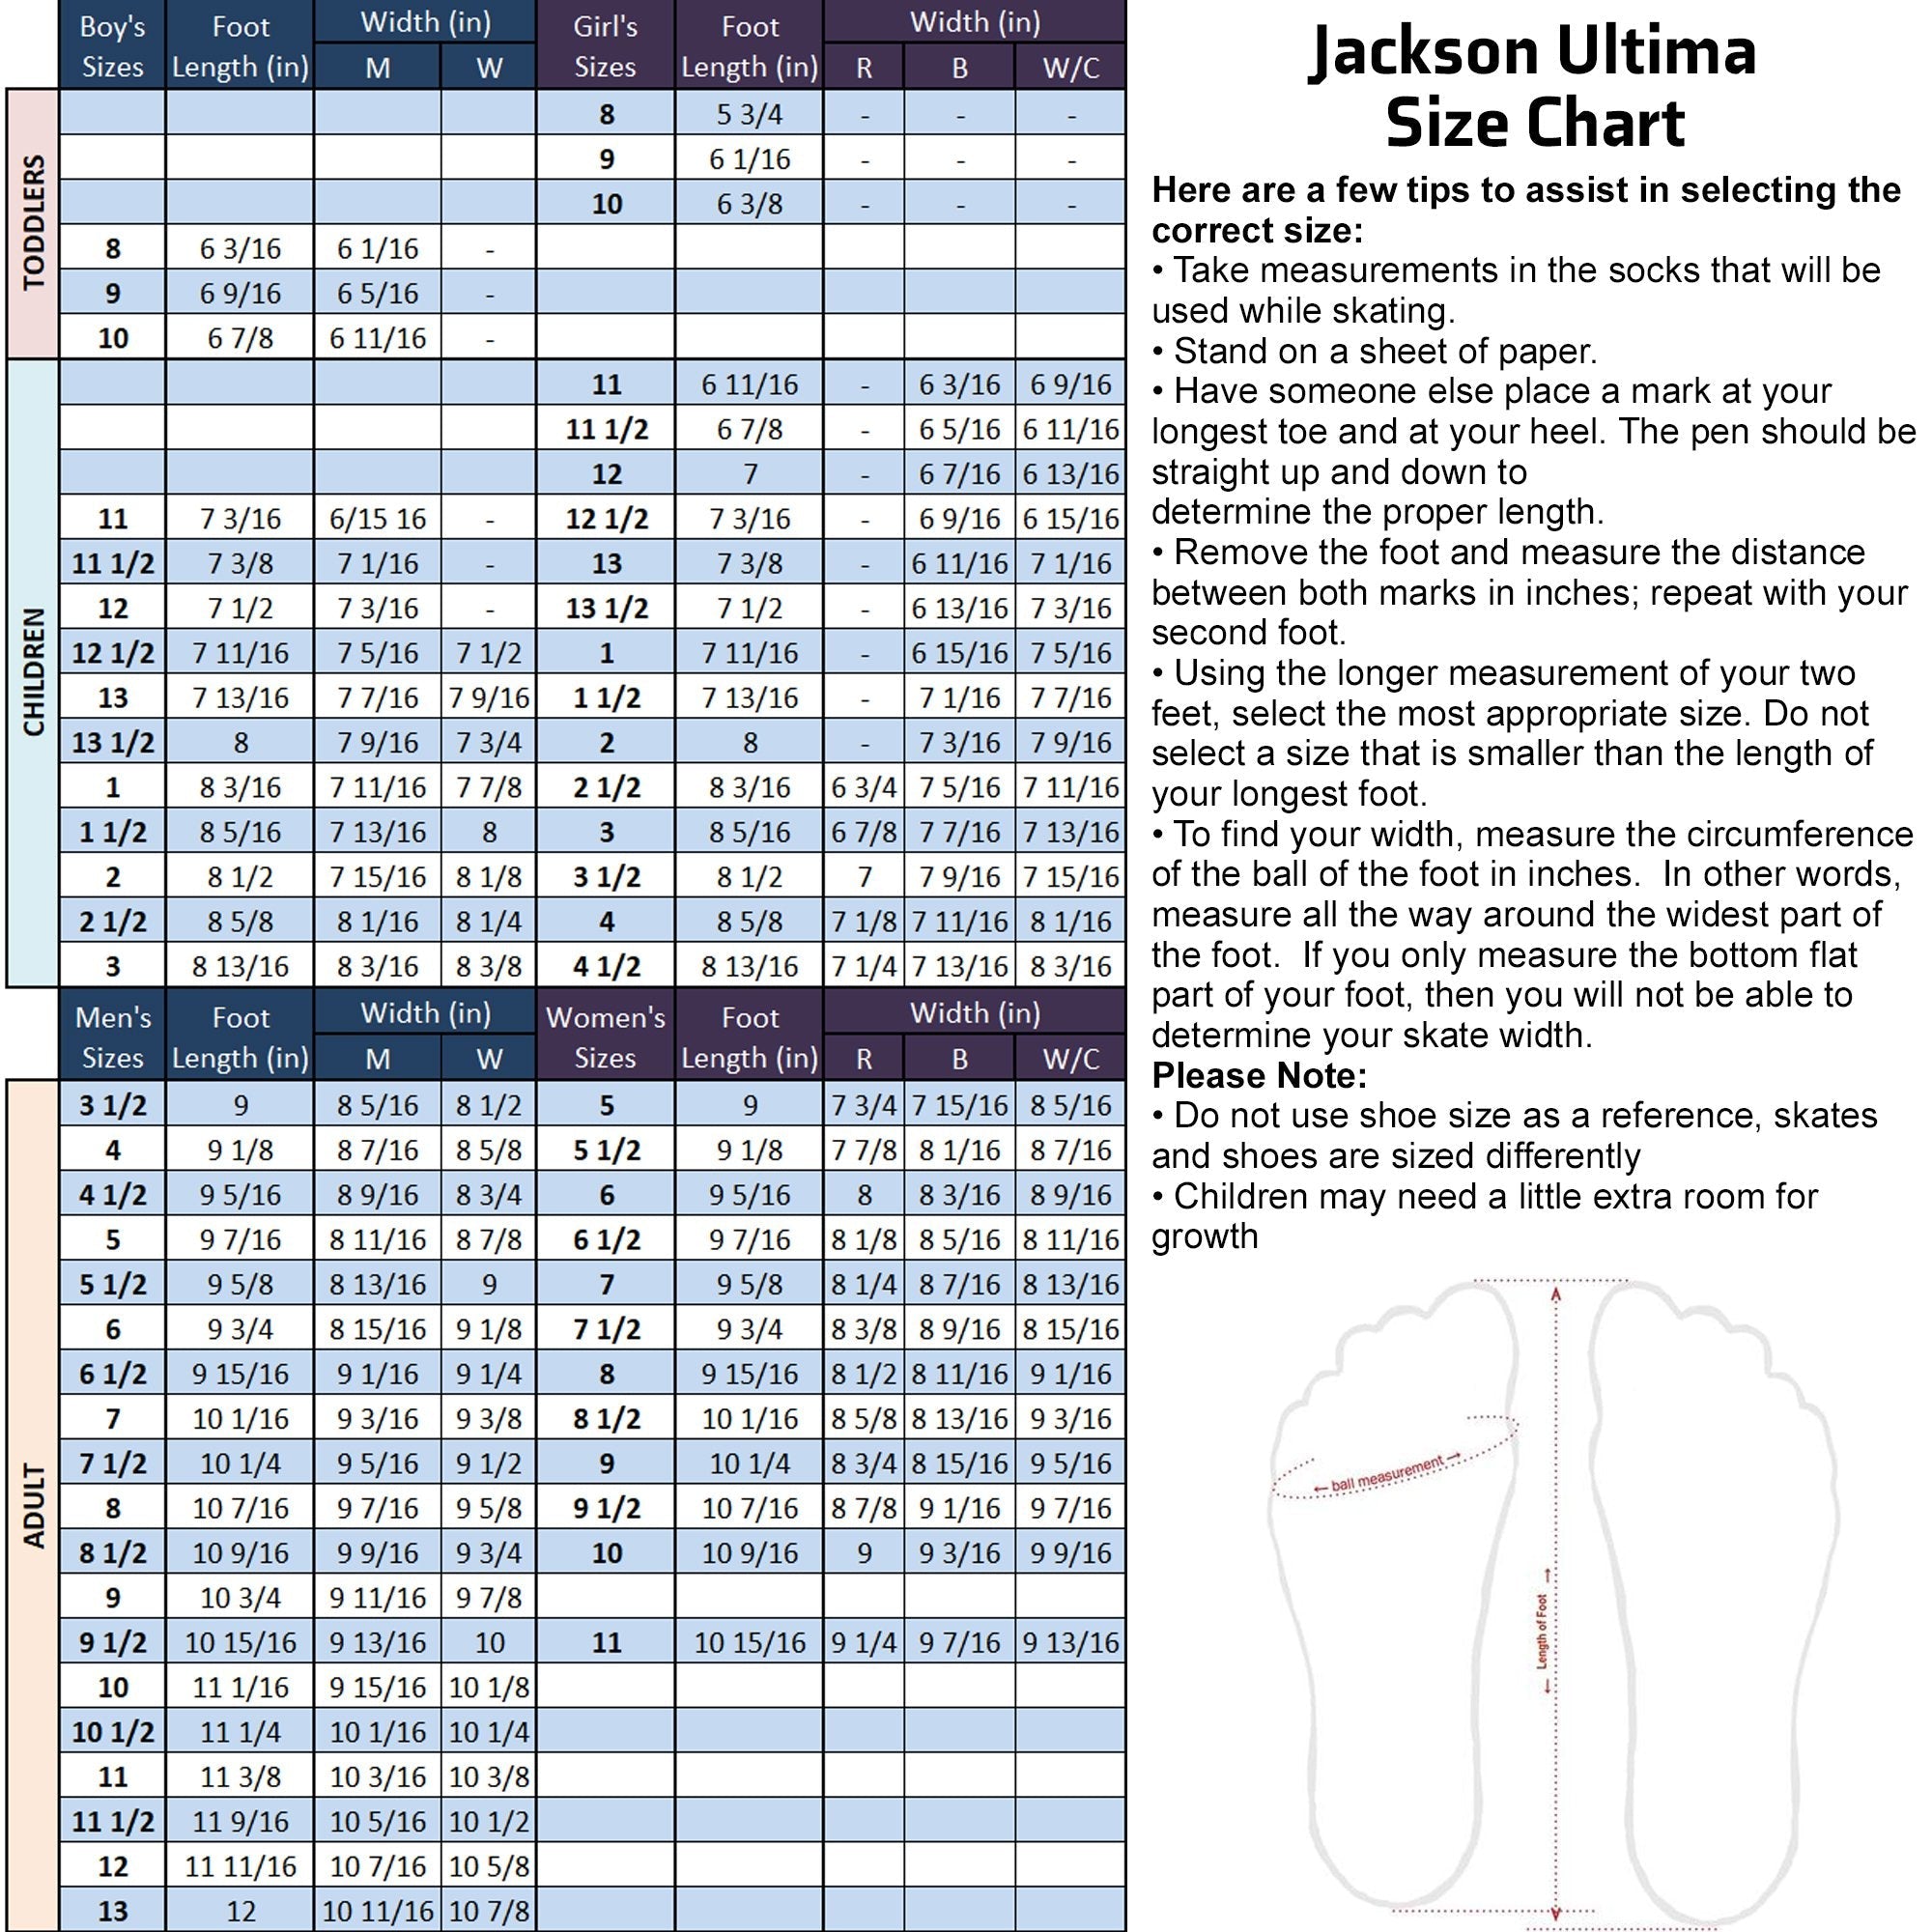 Jackson Ultima Mystique men's black figure skate